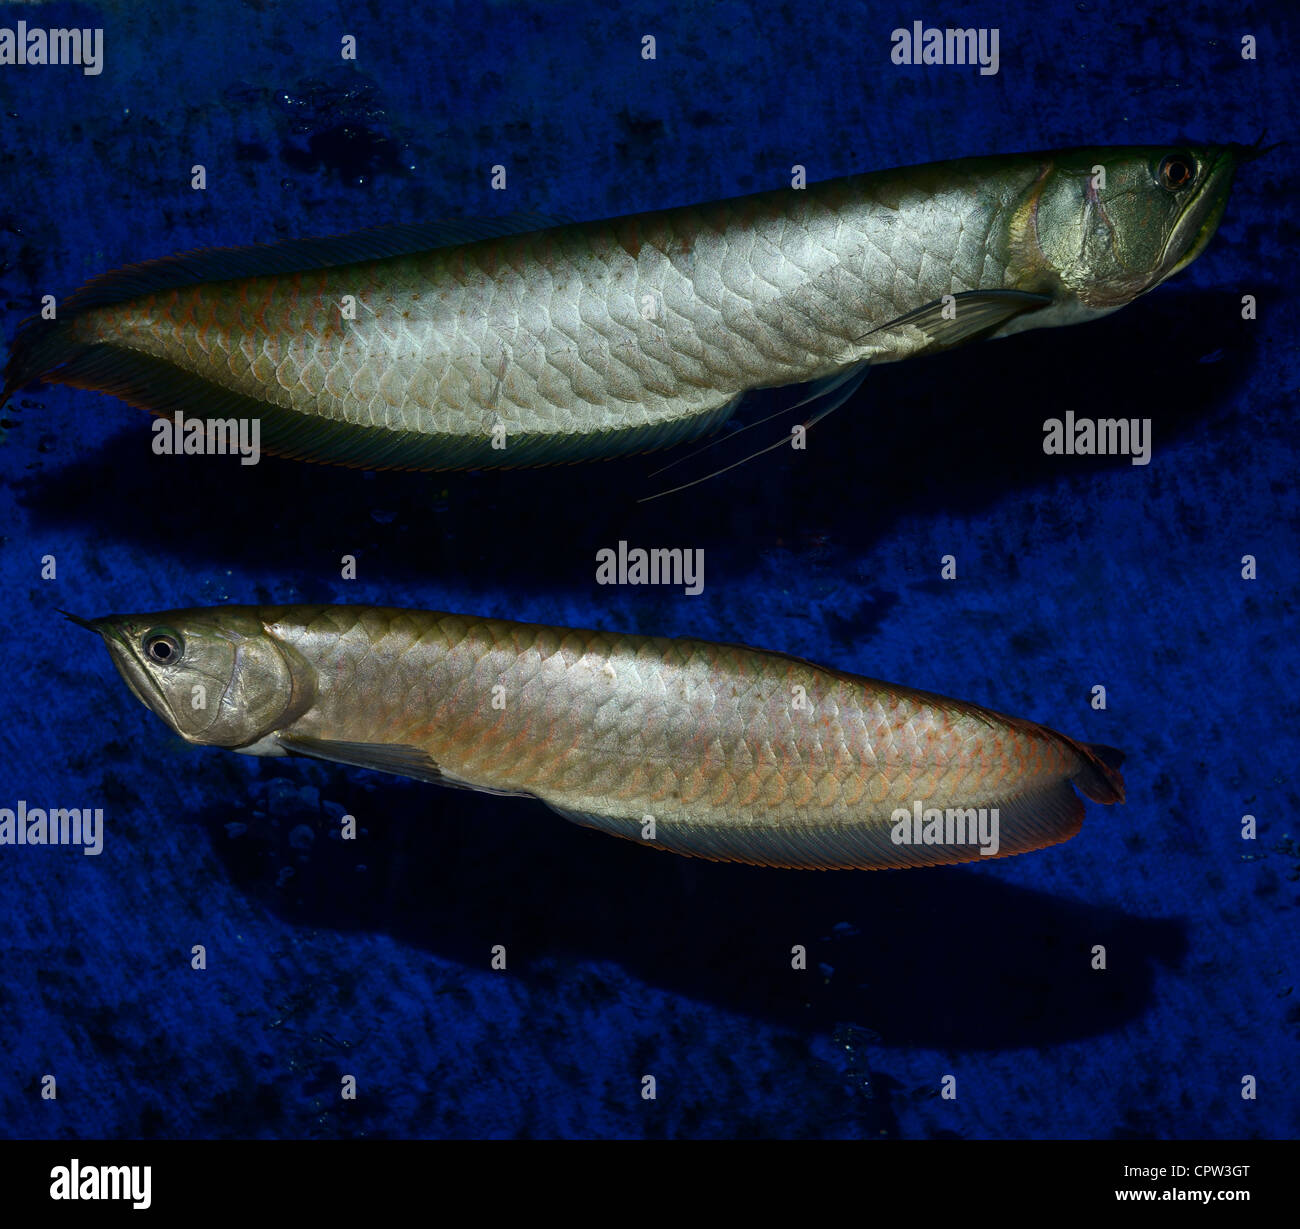 Two Silver Arowana freshwater bonytongue fish from the Amazon river in an aquarium Stock Photo